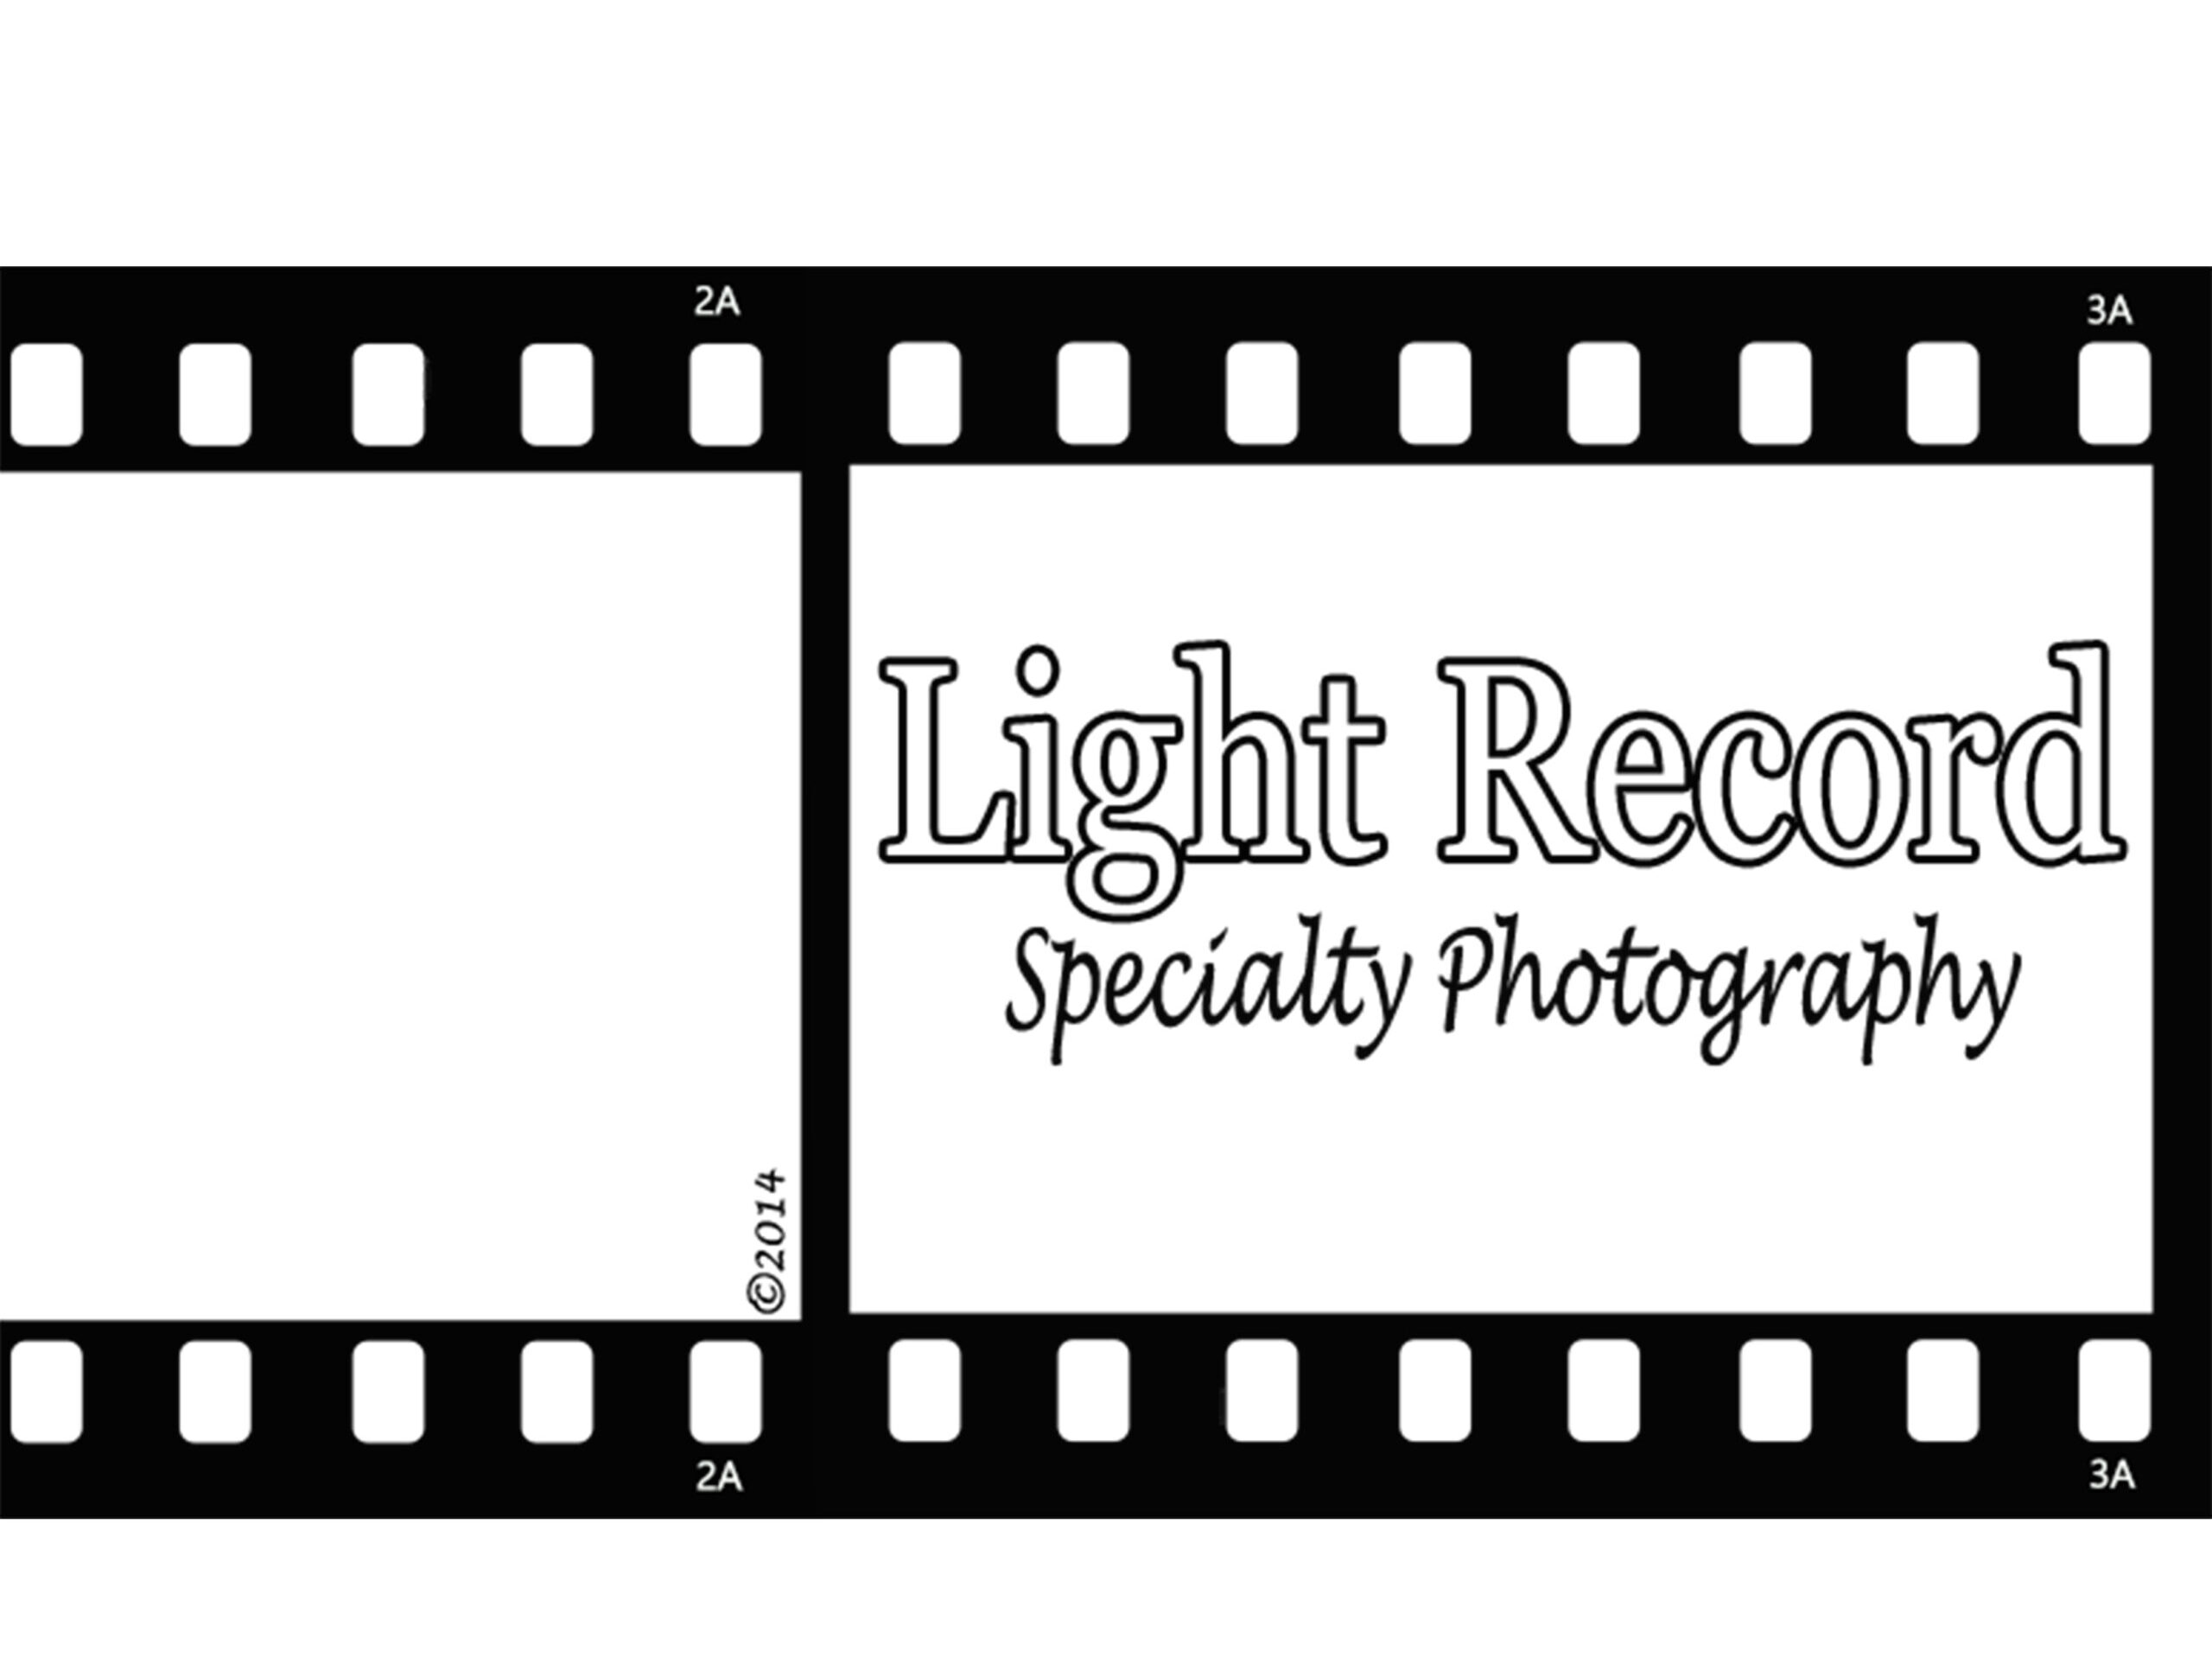 LIGHT RECORD